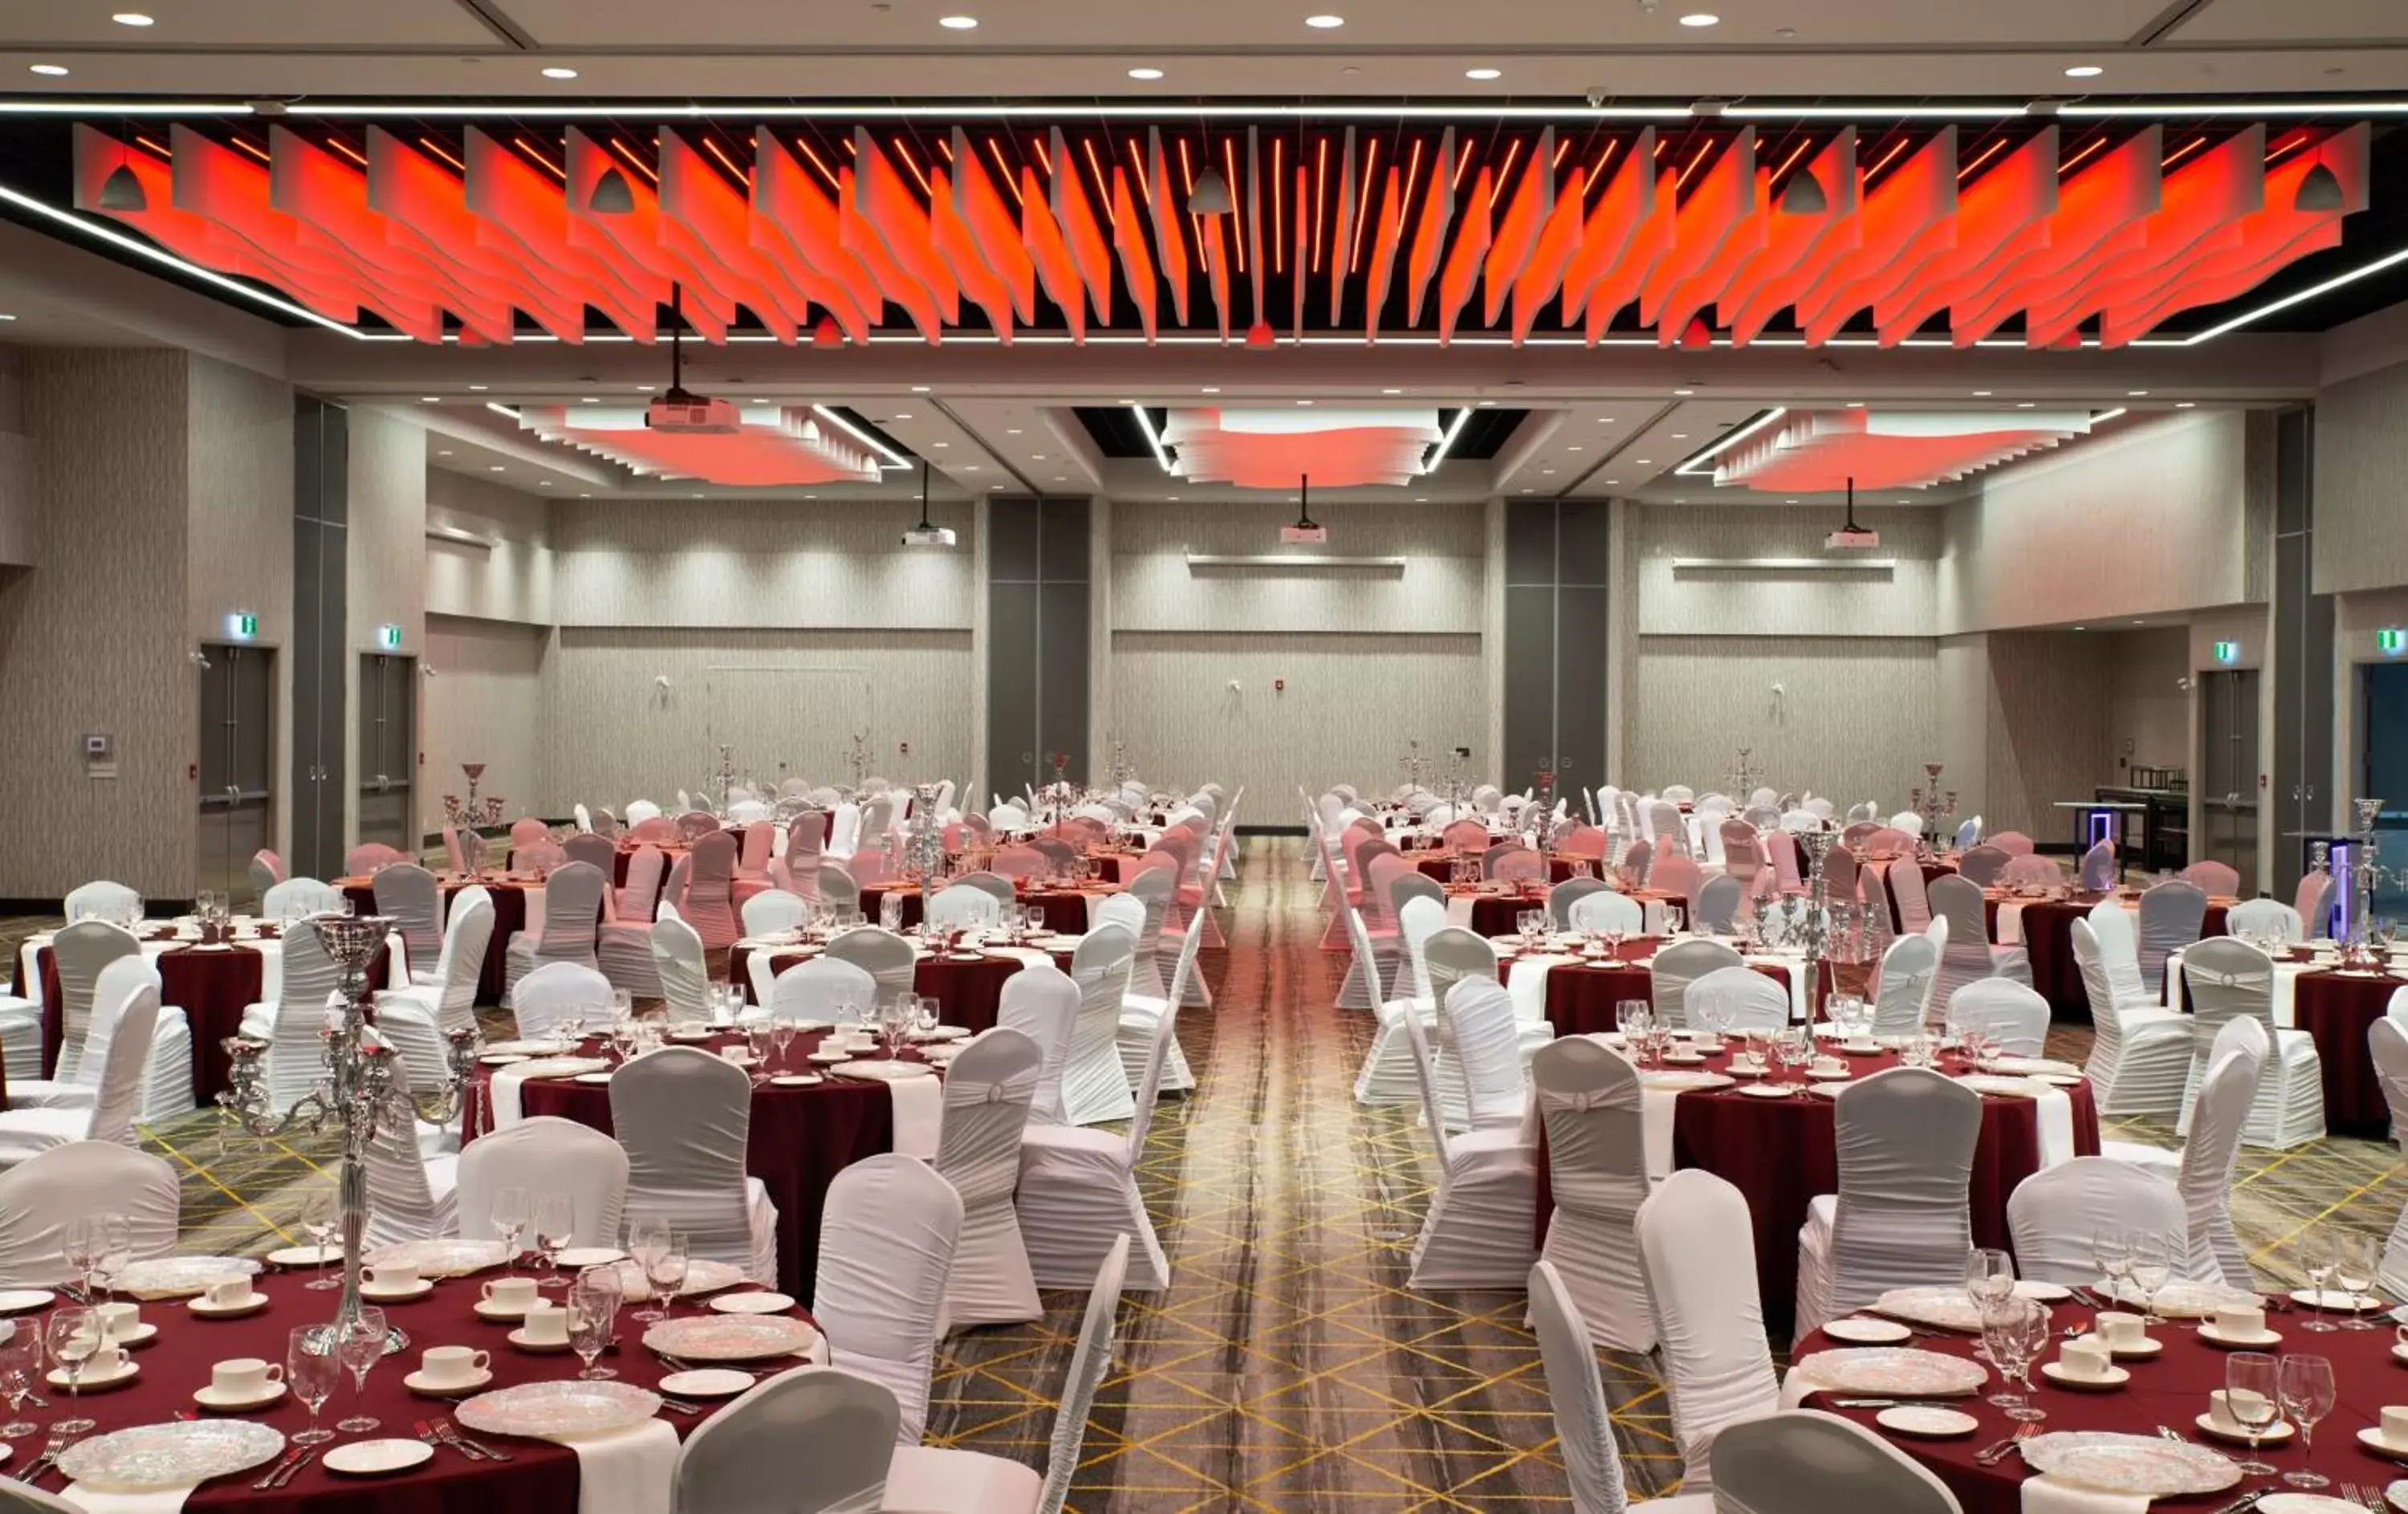 Banquet/Function facilities, Banquet Facilities in Holiday Inn Edmonton South - Evario Events, an IHG Hotel